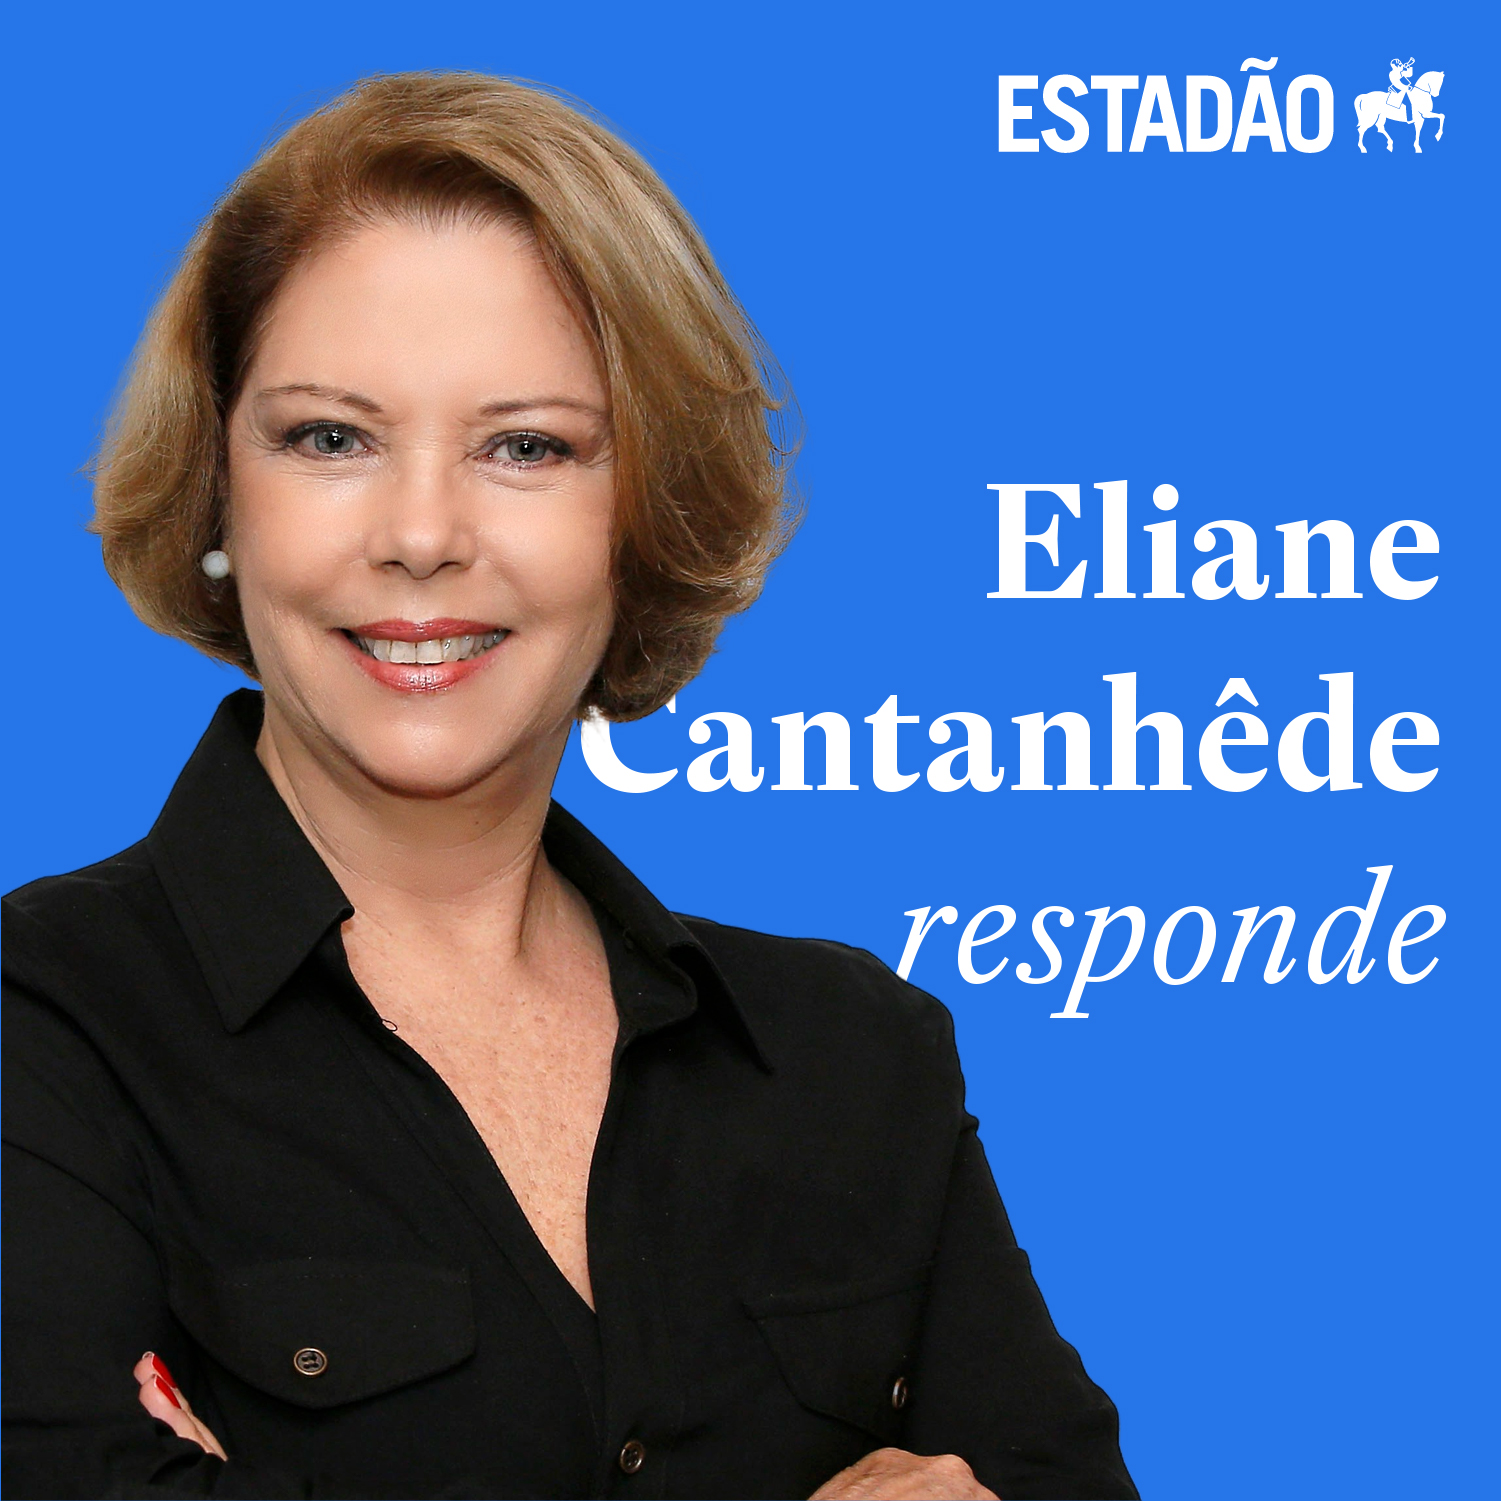 Eliane entrevista Armínio Fraga e repercute bravatas de Bolsonaro e Fux